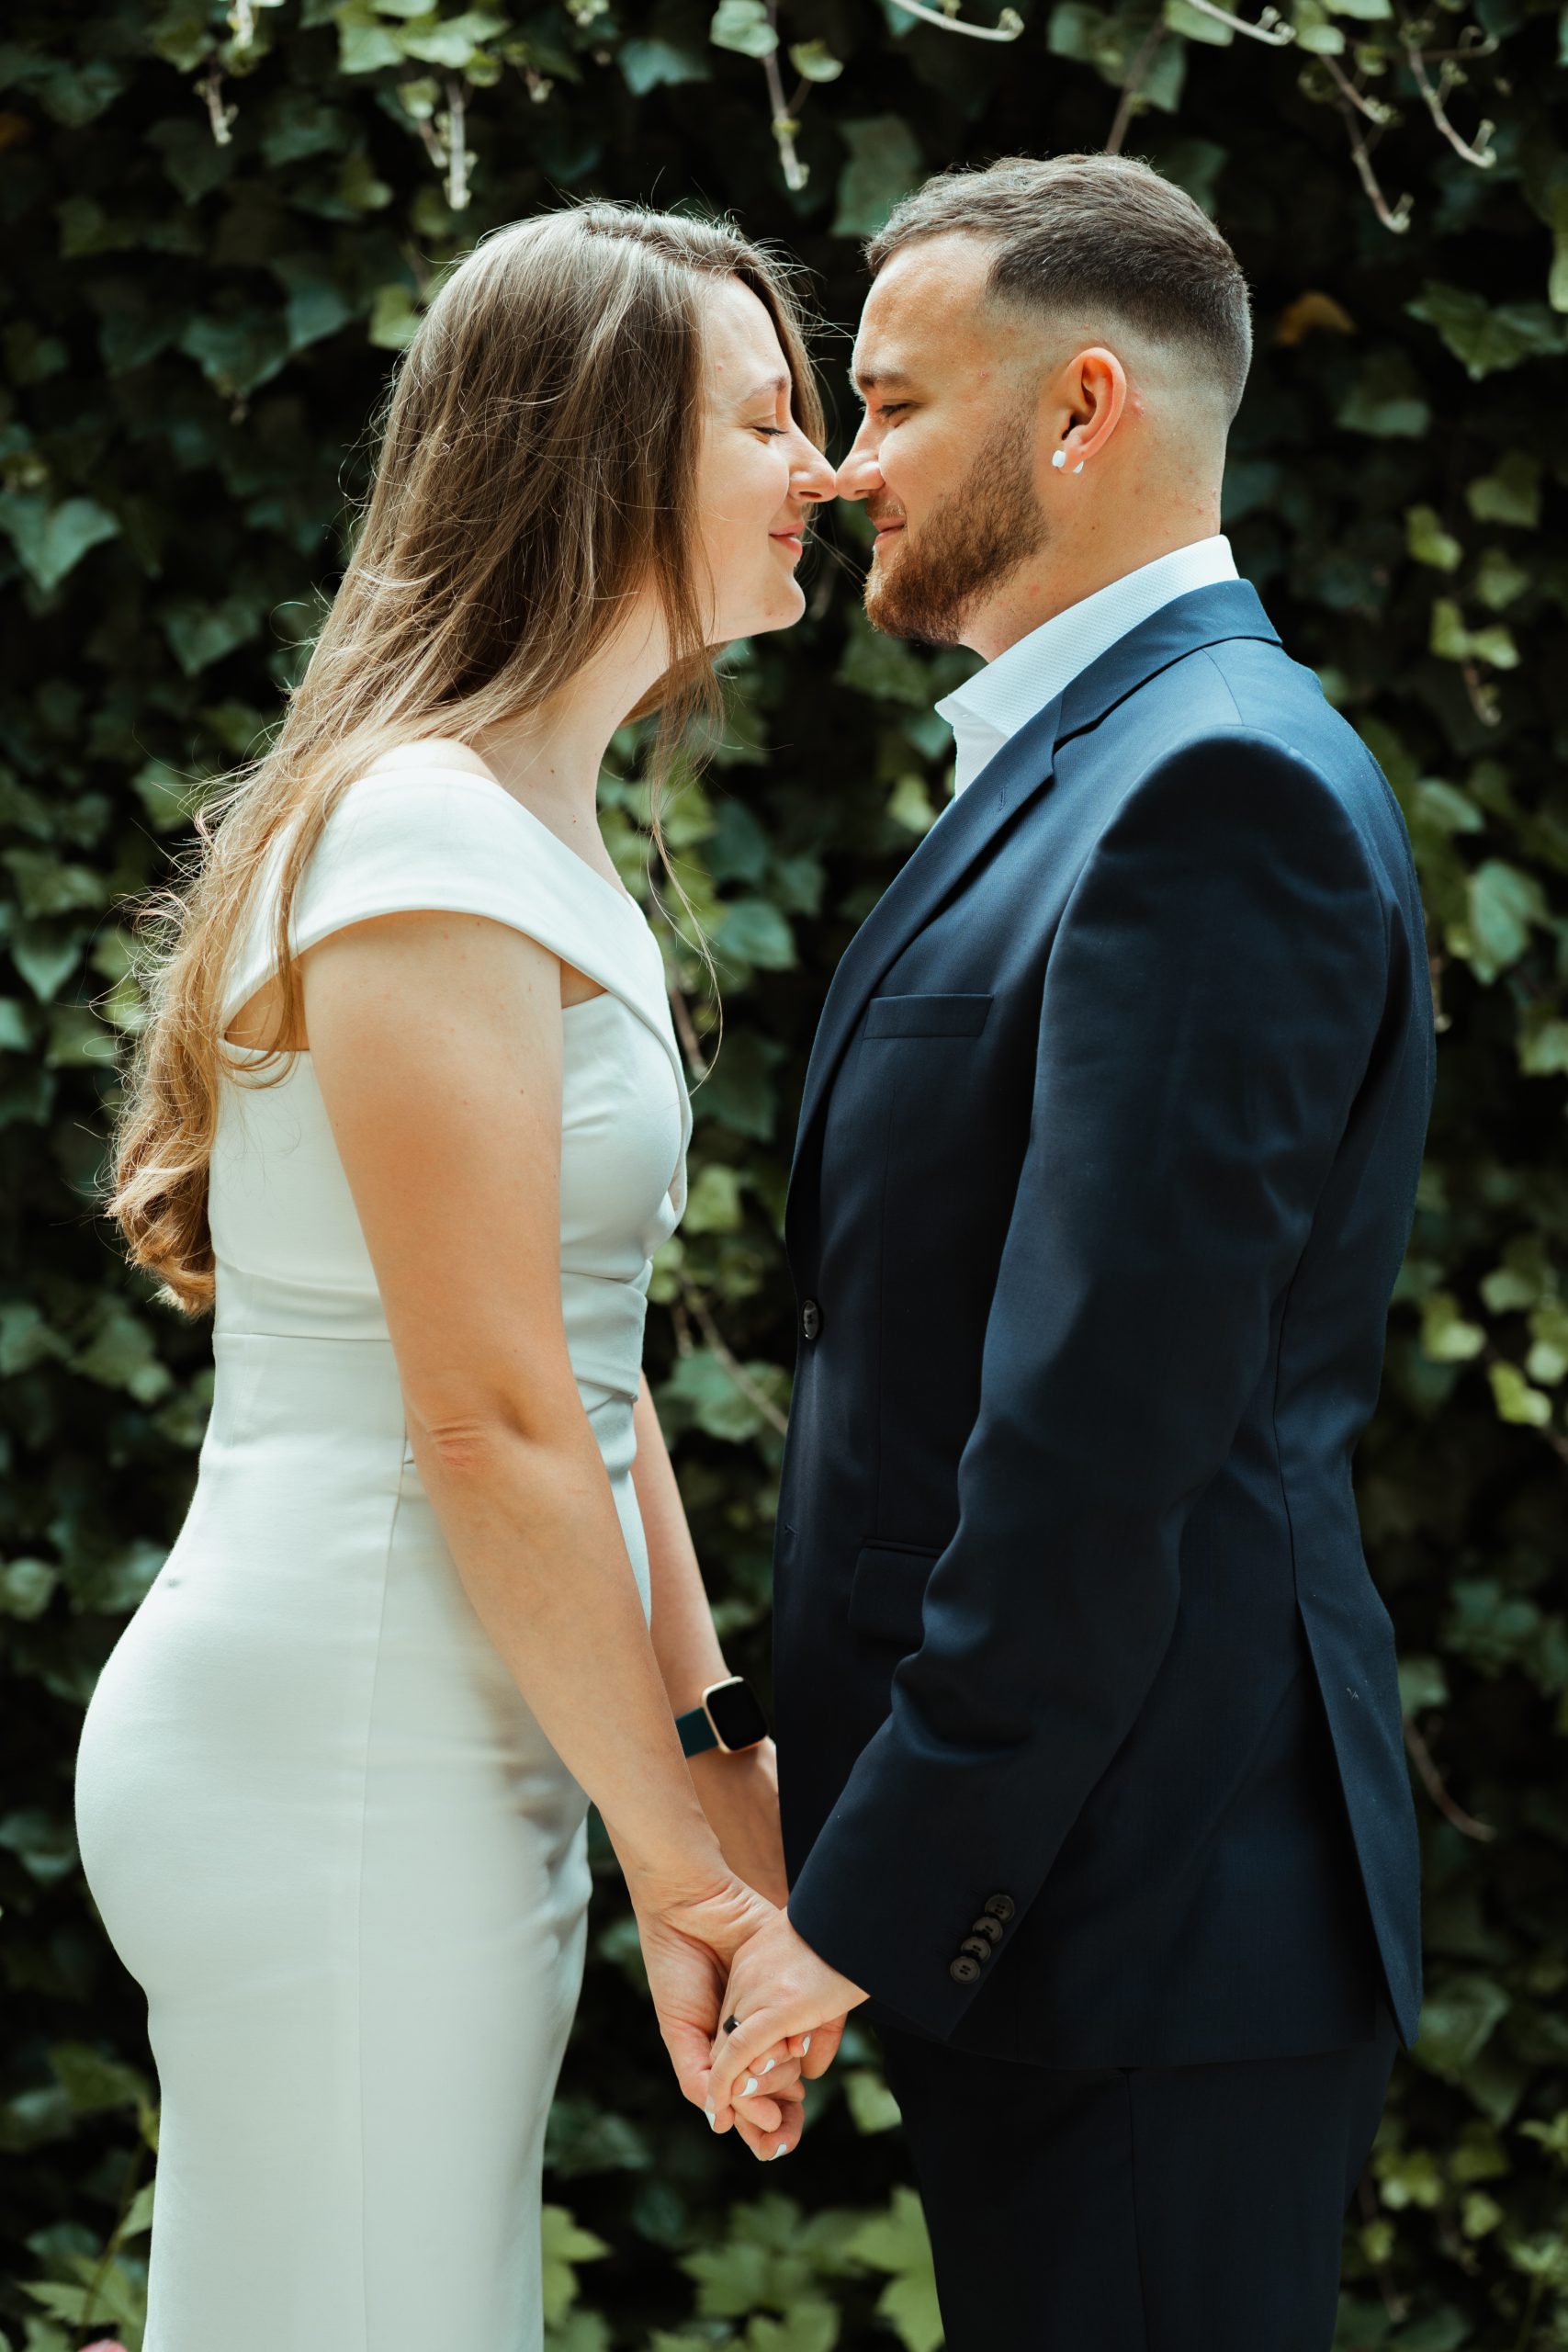 Engagement and Wedding Photographer